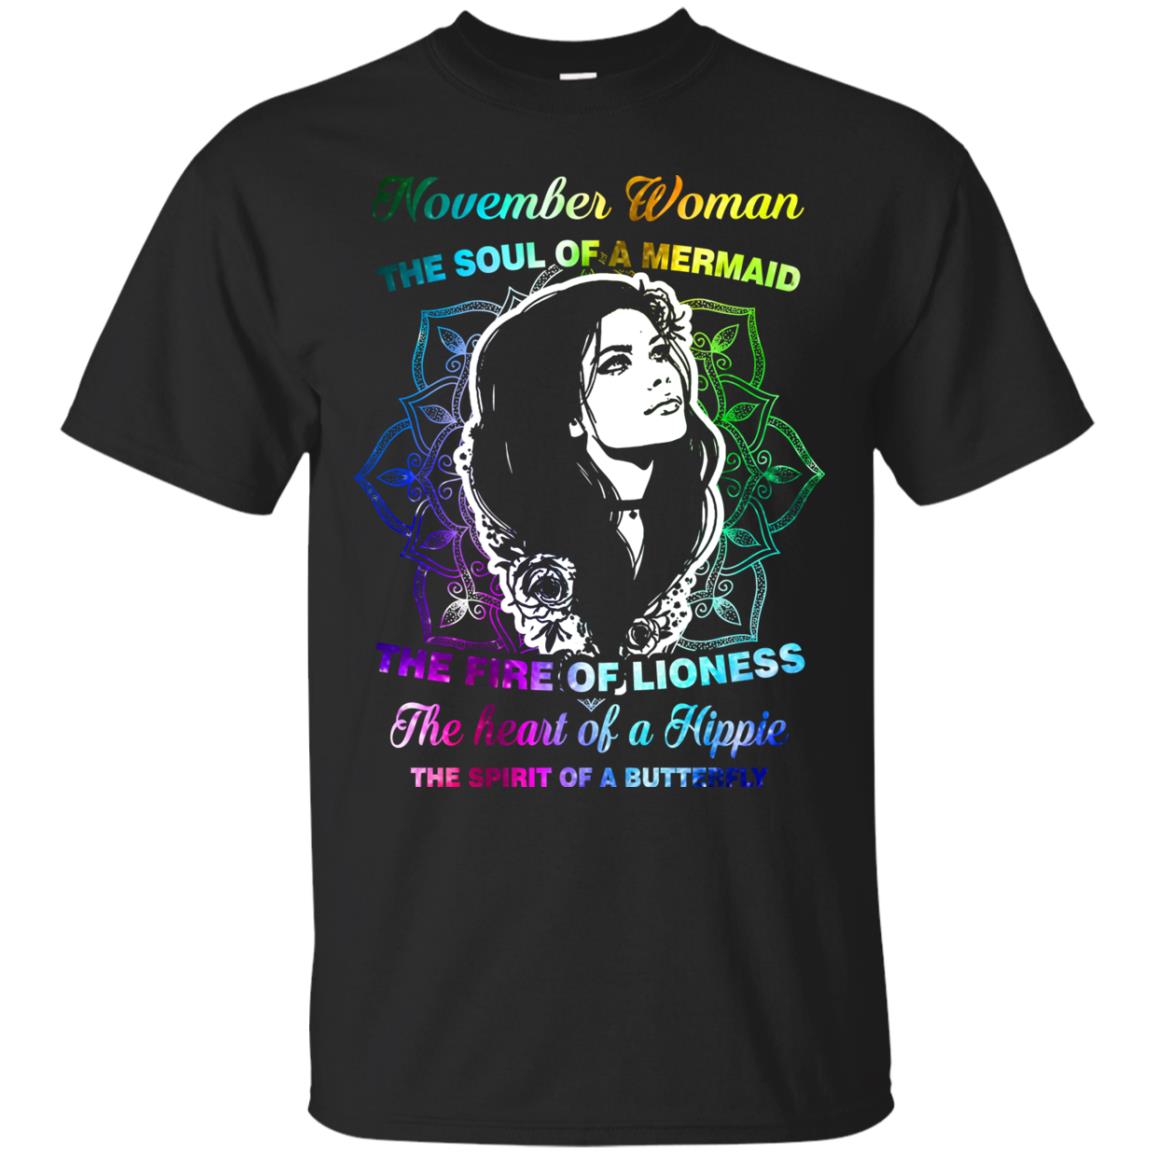 November Woman Shirt The Soul Of A Mermaid The Fire Of Lioness The Heart Of A Hippeie The Spirit Of A ButterflyG200 Gildan Ultra Cotton T-Shirt